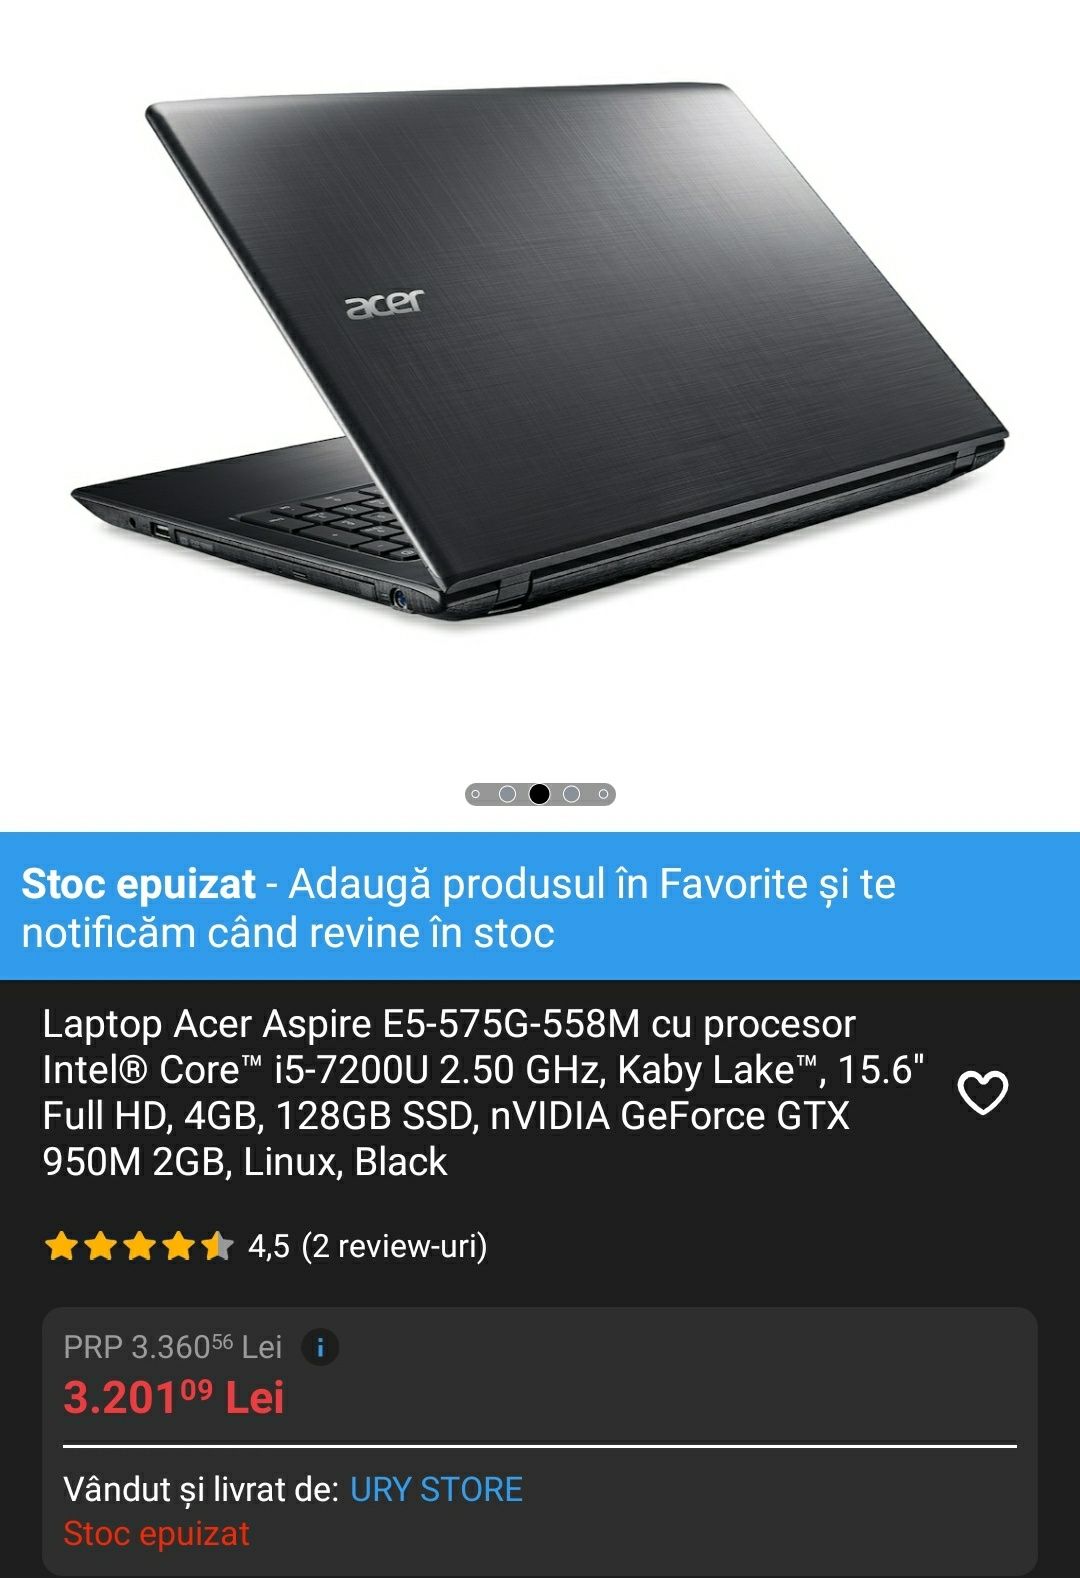 Laptop Gaming Facultate Acer Aspire E5-575G 950m, i7 7500, 8gb ram